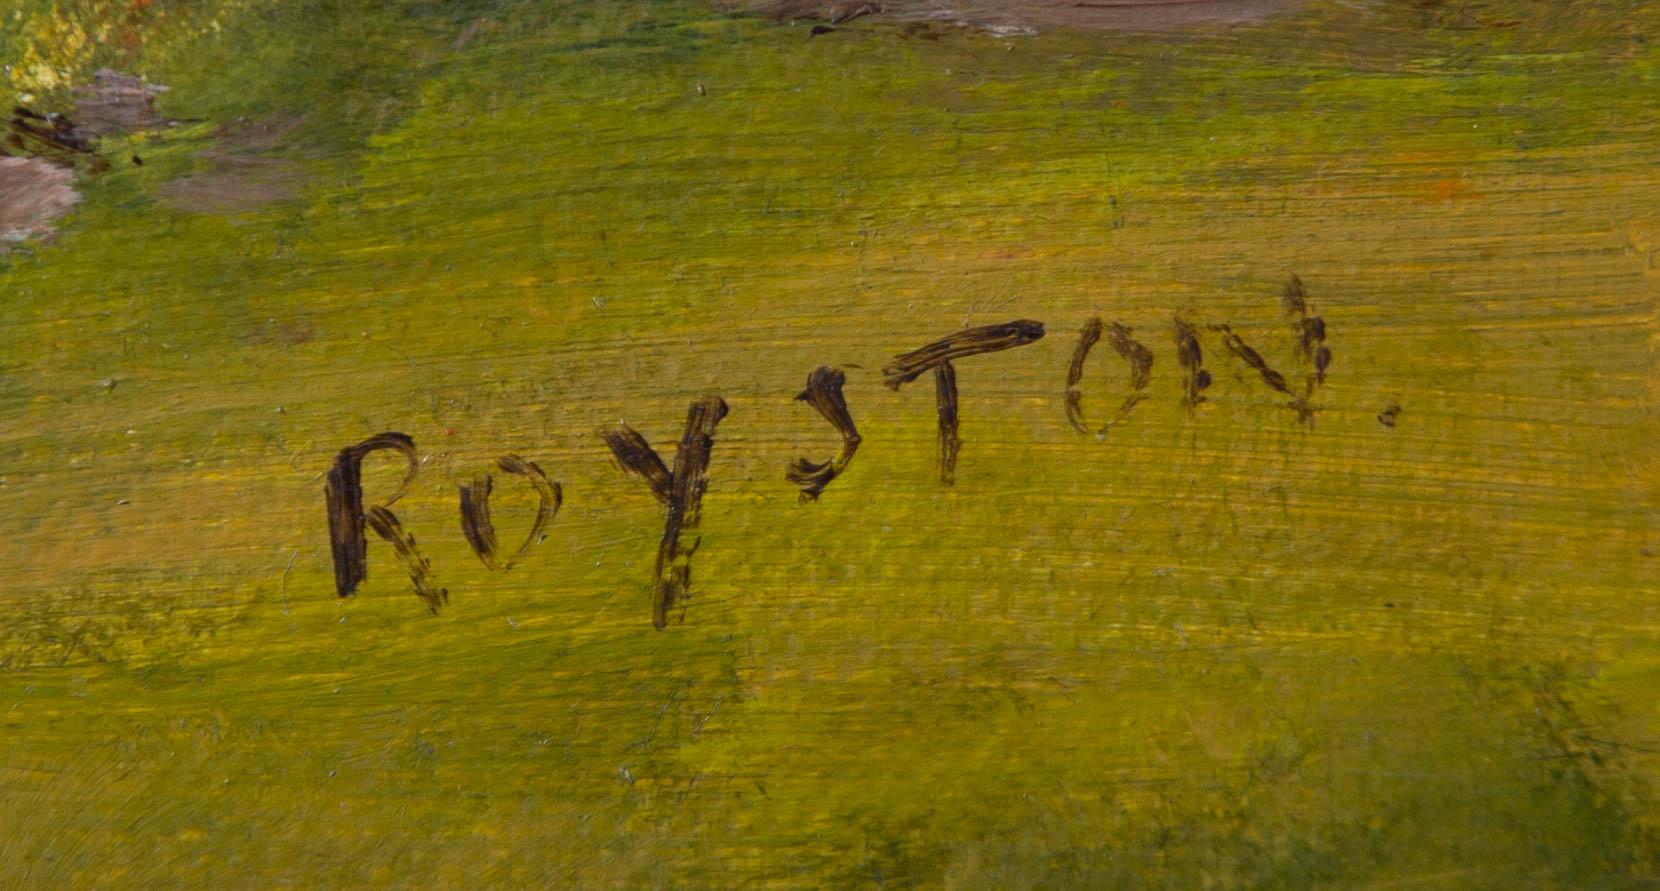 Royston - 1990 Oil, Widecombe in the Moor, Dartmoor For Sale 4